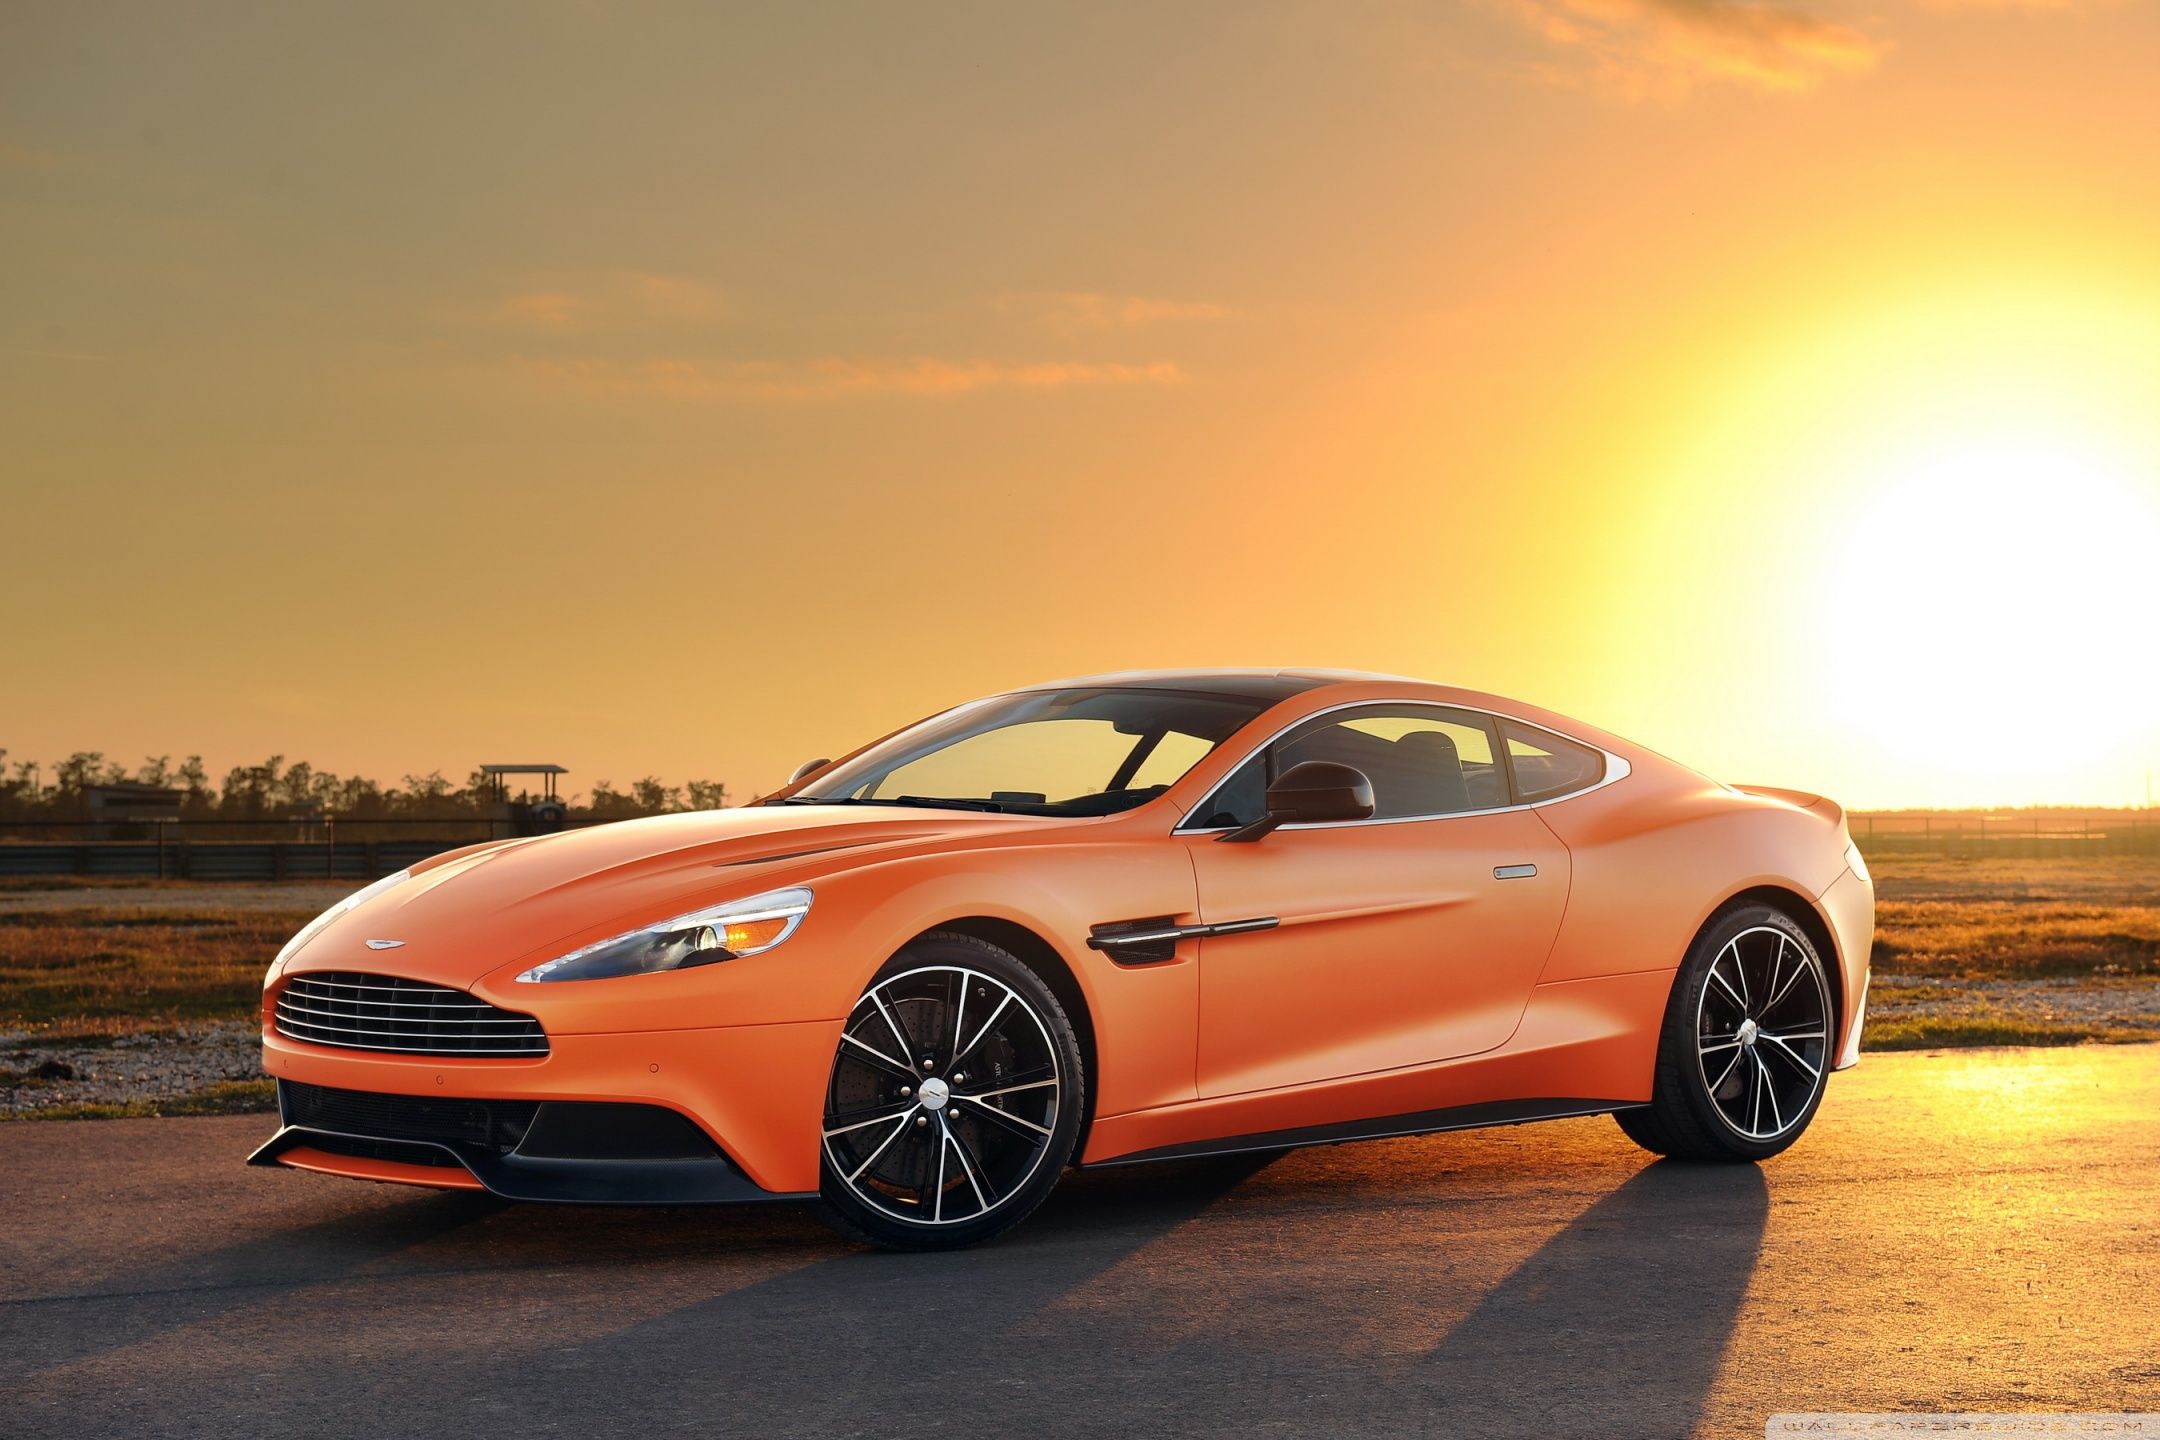 Orange Aston Martin Vanquish Car 4k HD Desktop Wallpaper For iPad